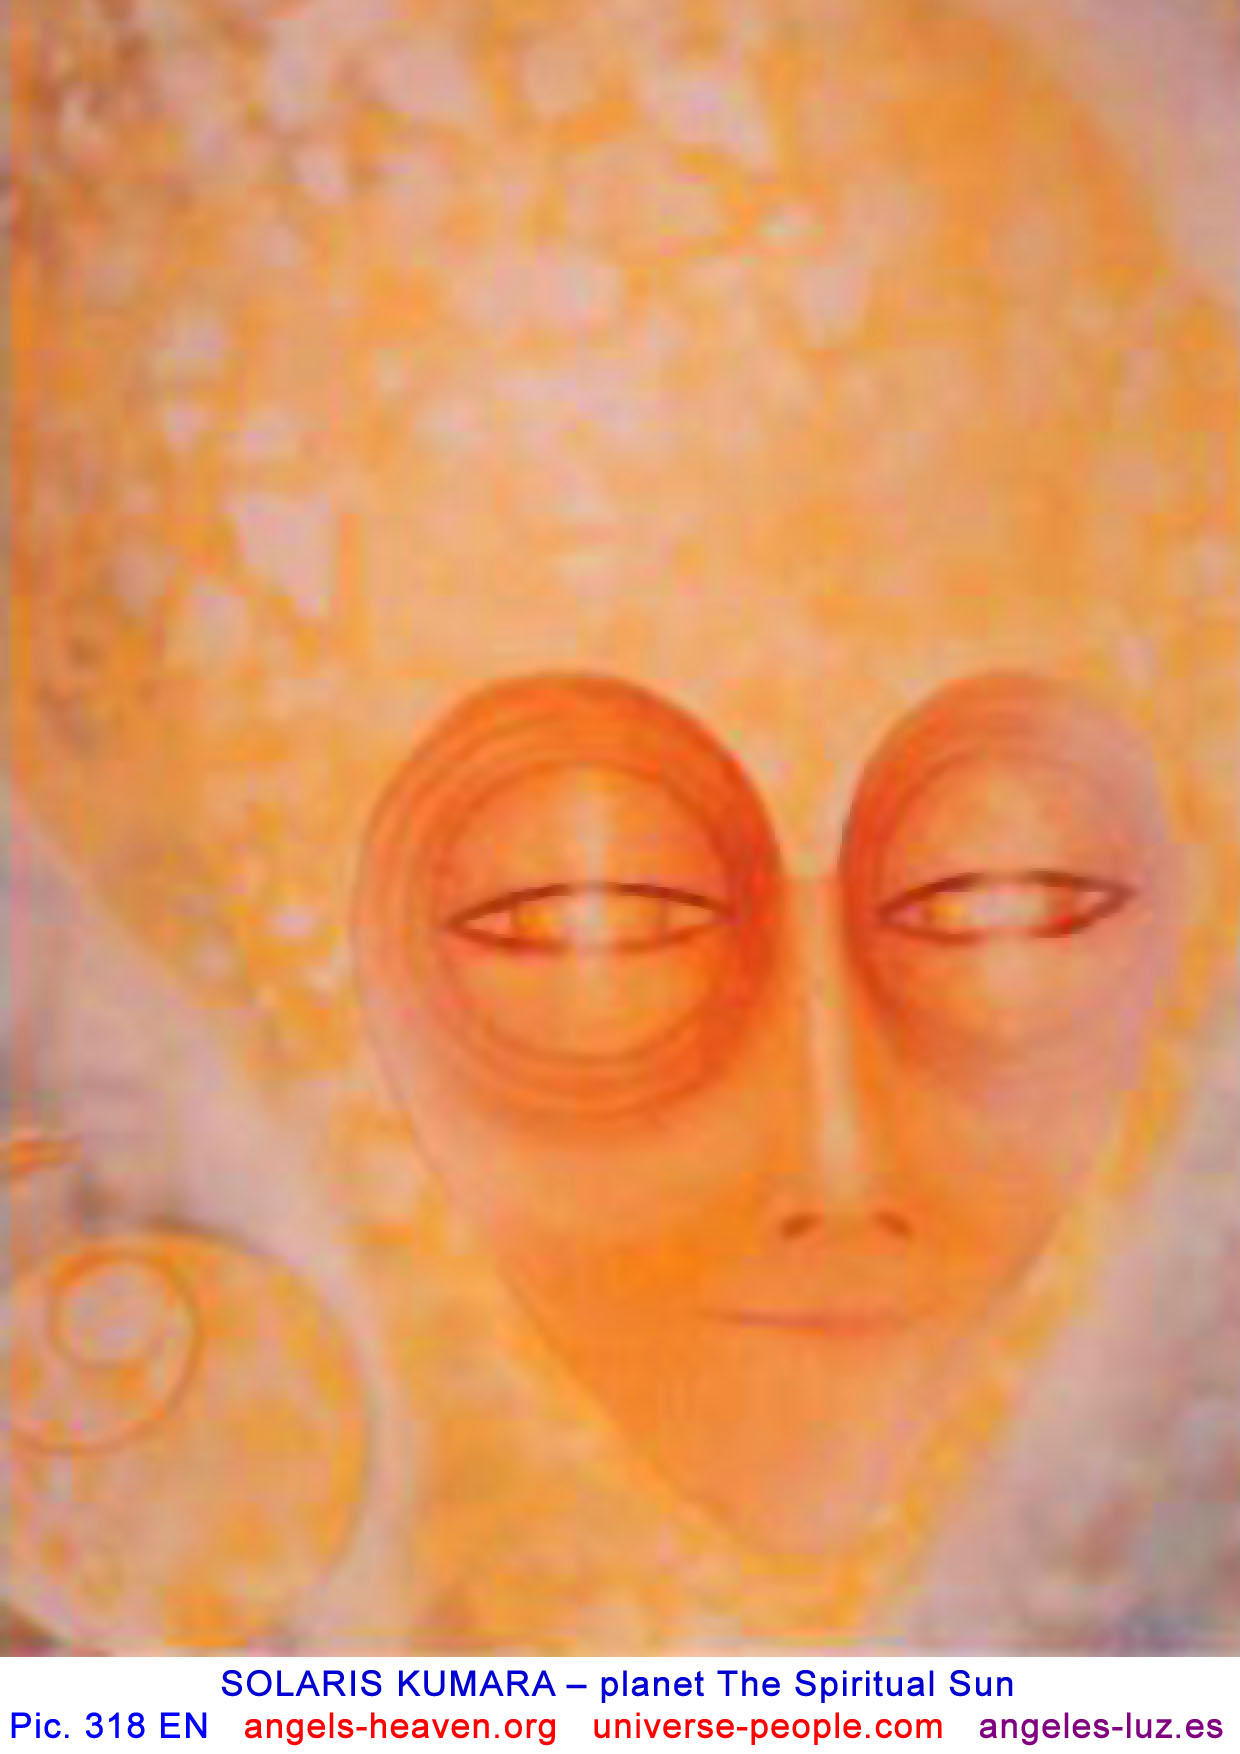 Cosmic master SOLARIS KUMARA - planet The Spiritual Sun